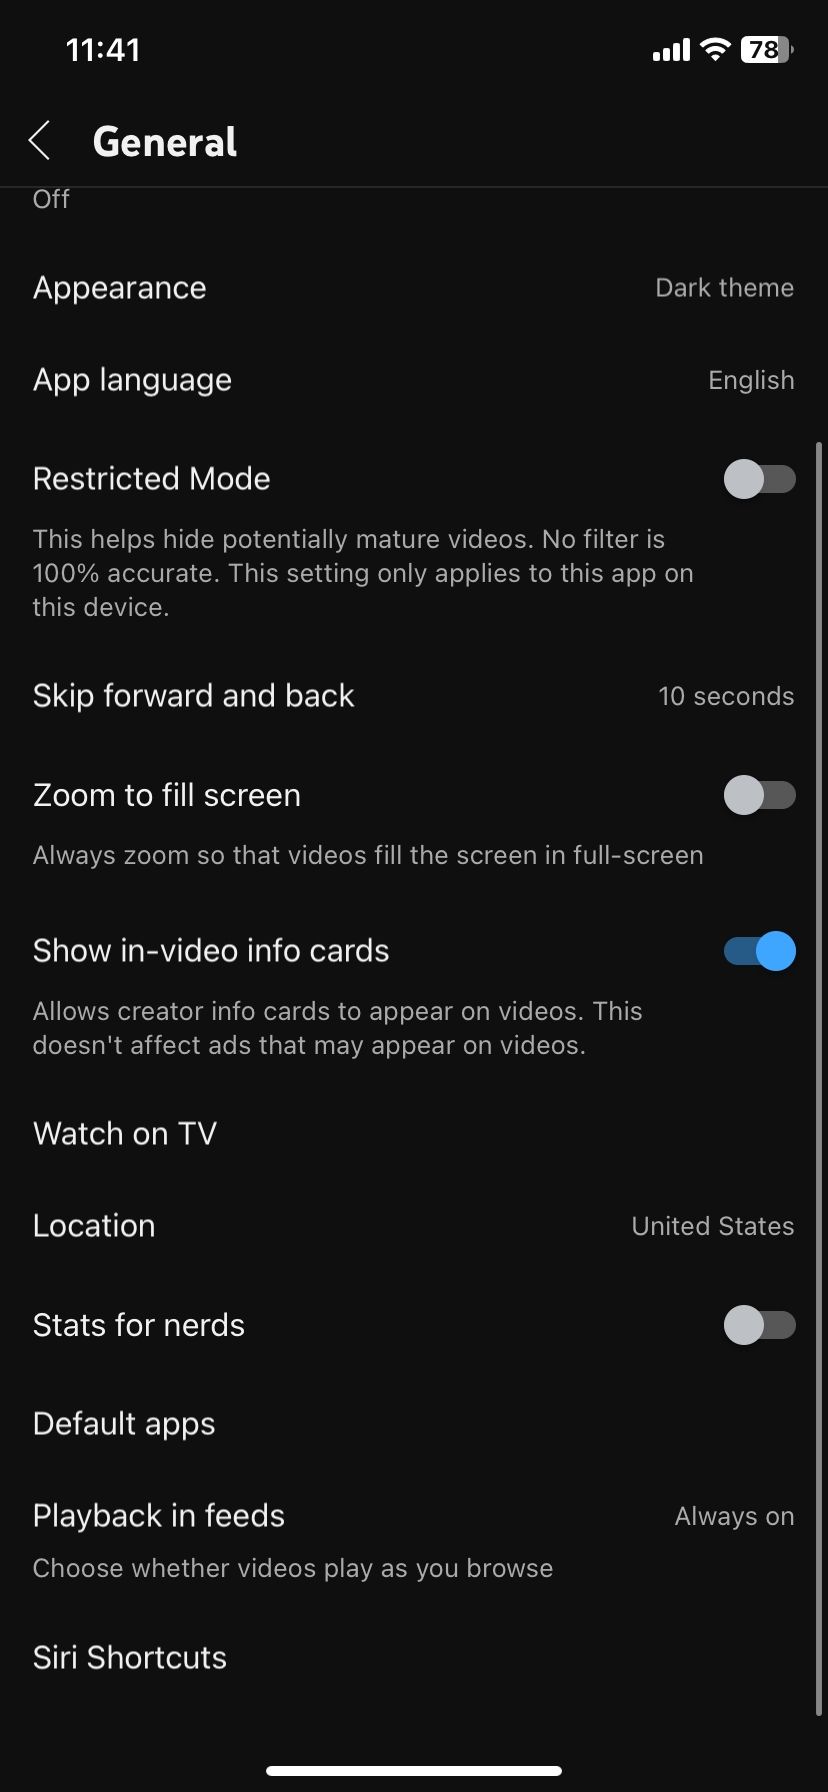 General settings menu on YouTube mobile